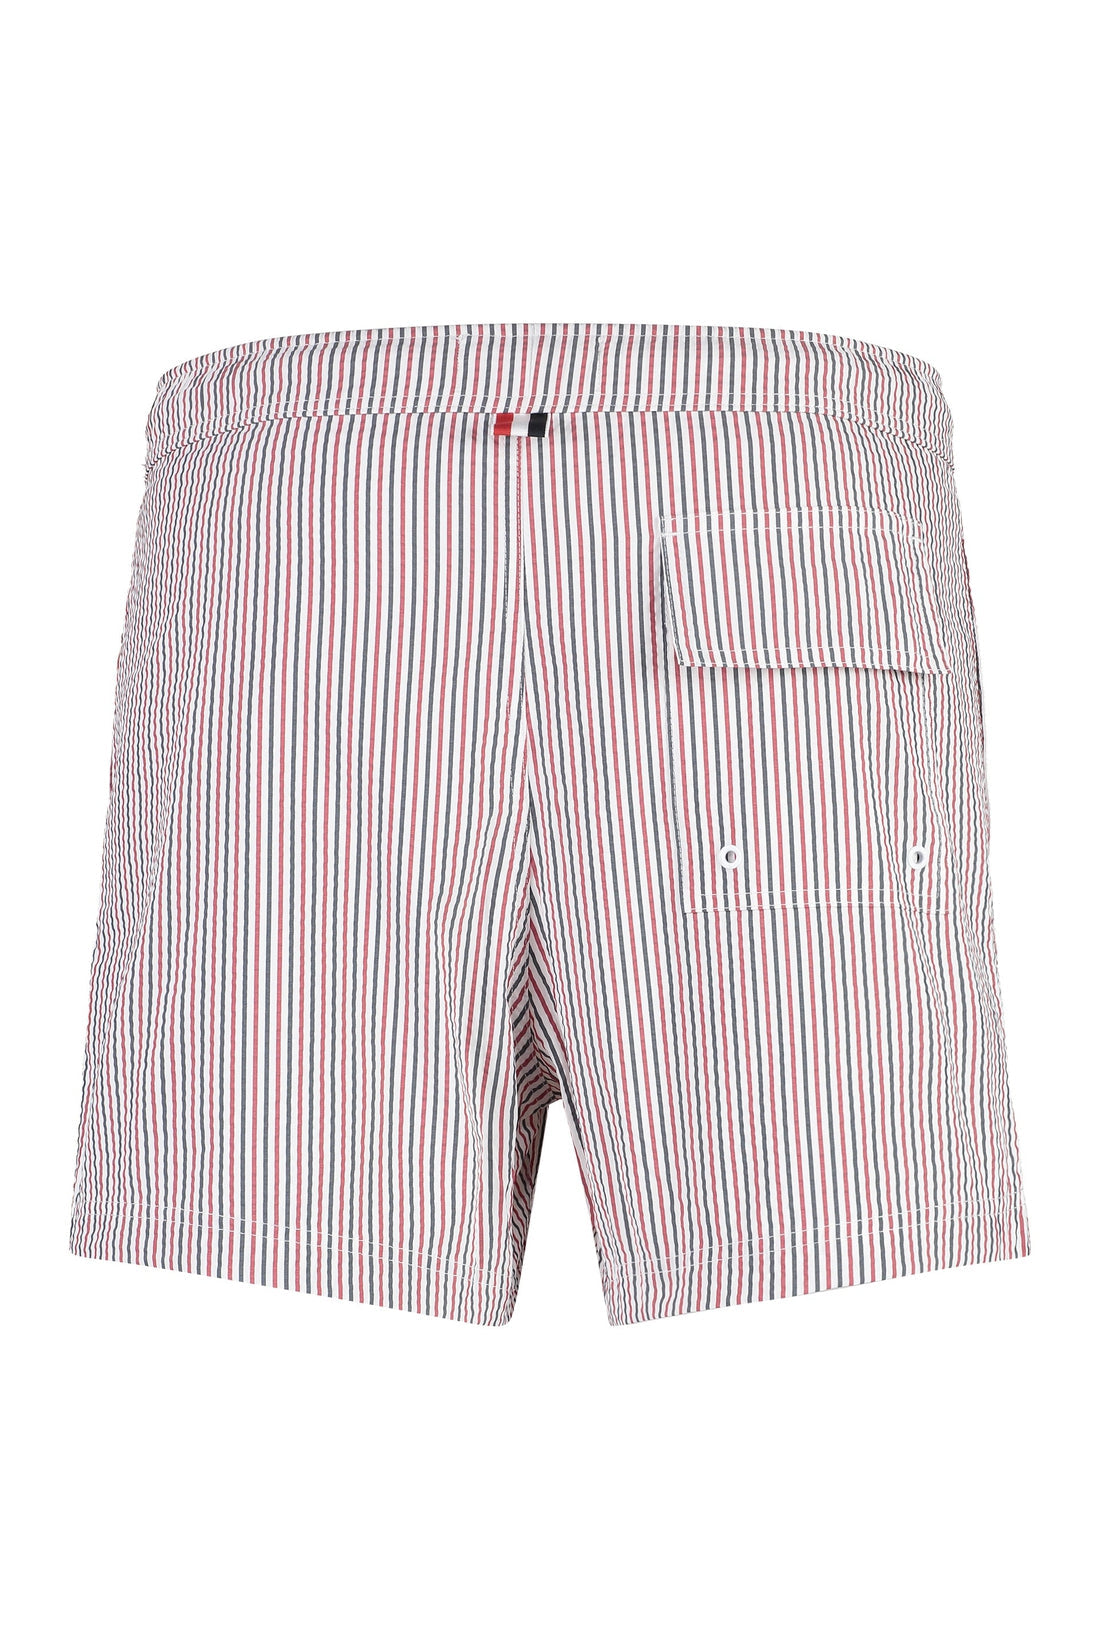 Thom Browne-OUTLET-SALE-Striped swim shorts-ARCHIVIST